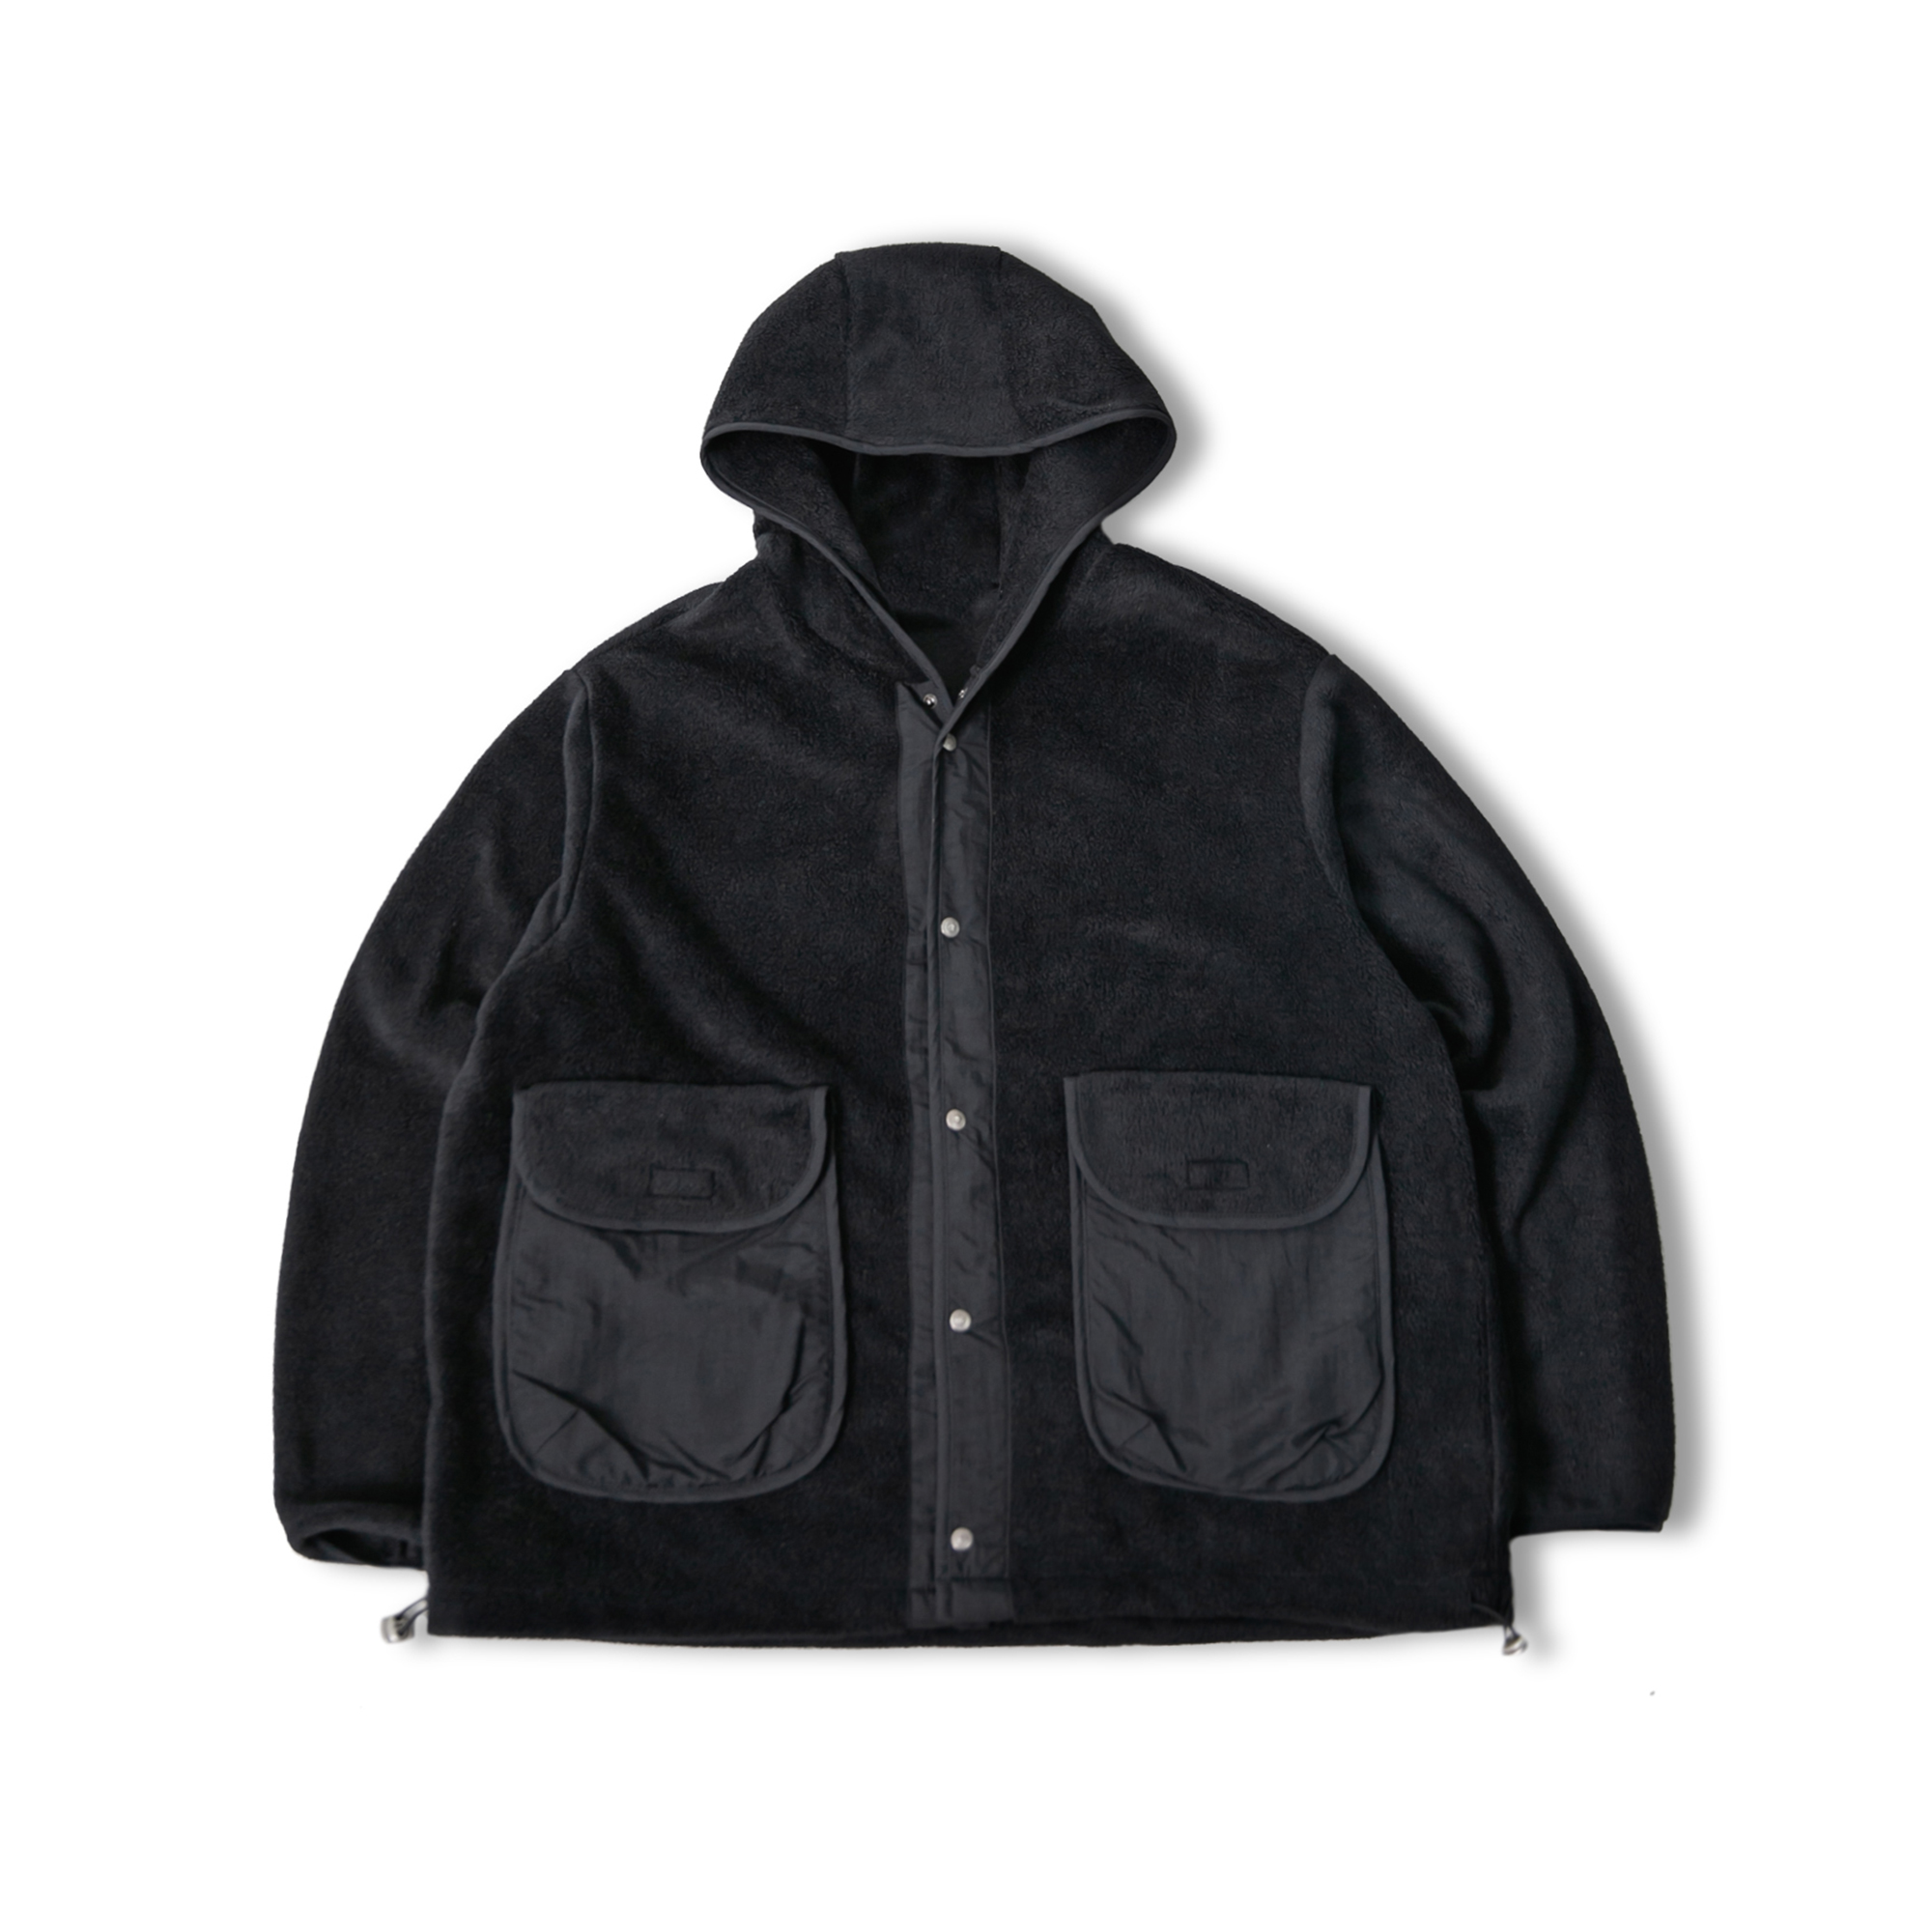 Two Pocket Fleece Hoodie Jacket - Black